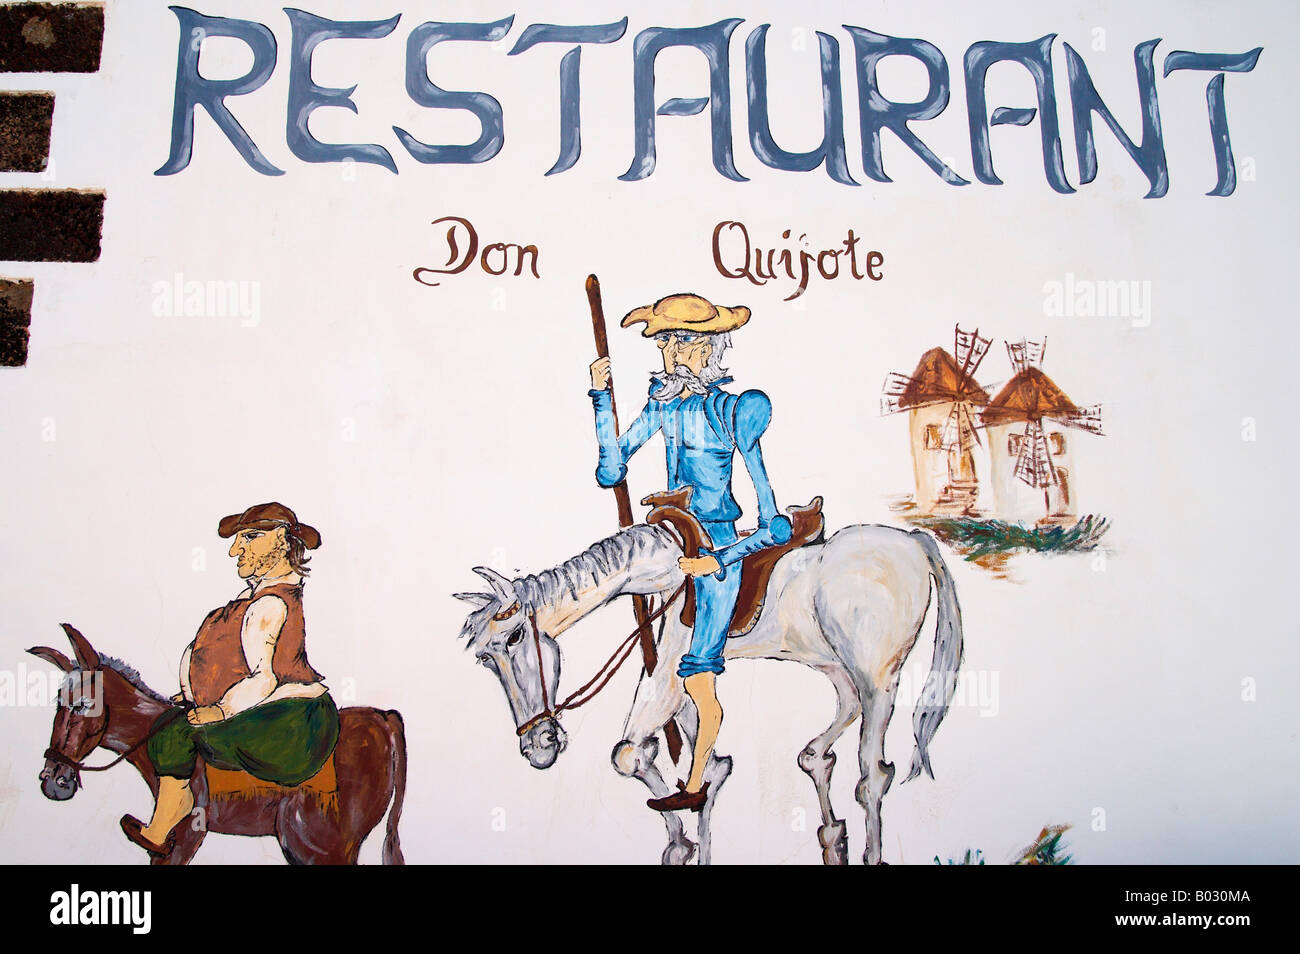 Lanzarote: Don Quijote Restaurant Stock Photo